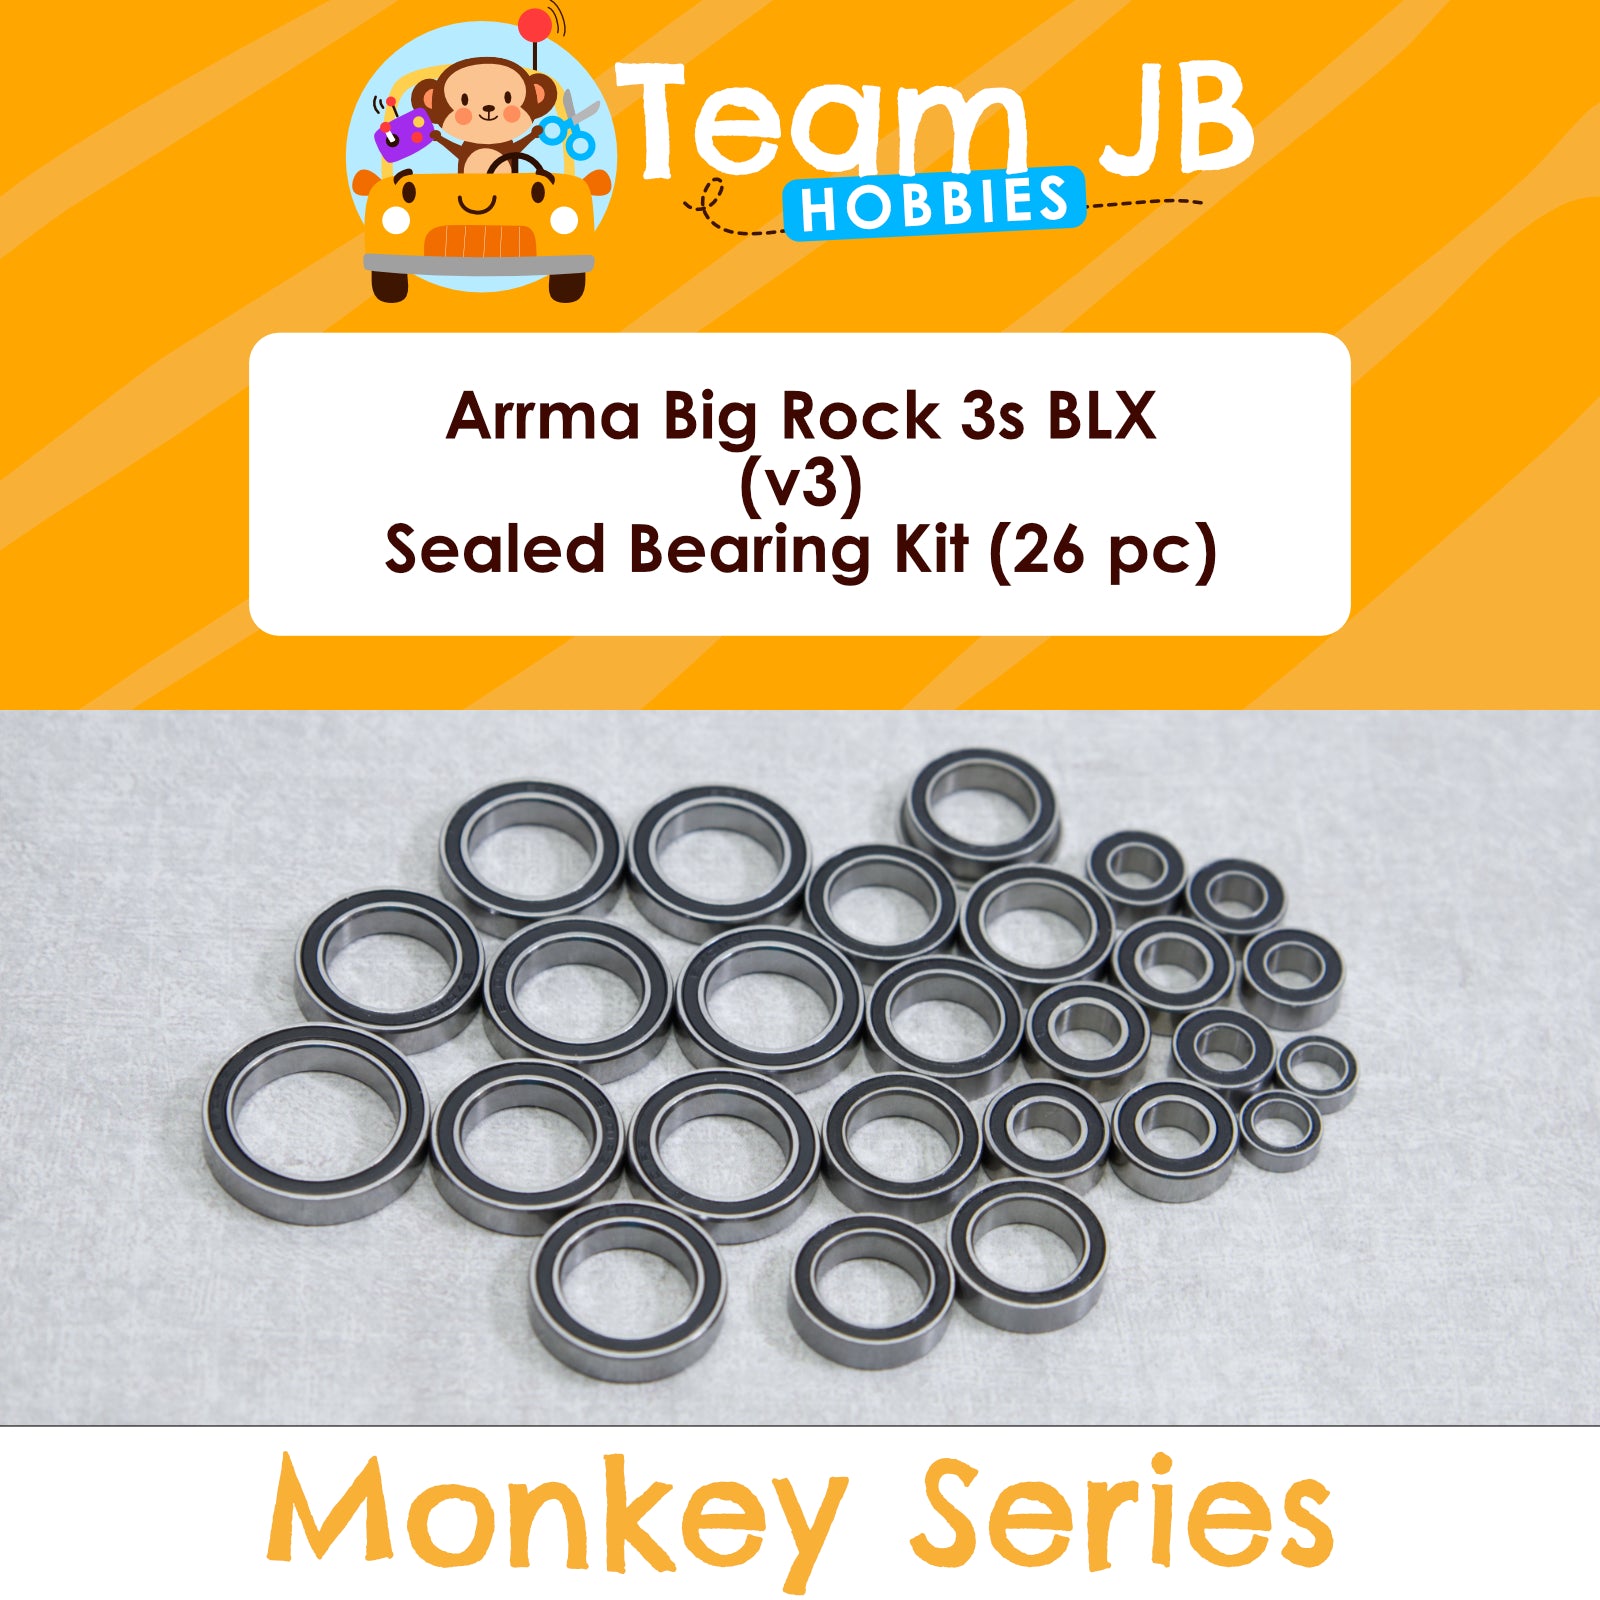 Arrma Big Rock 3s BLX (v3) Sealed Bearing Kit